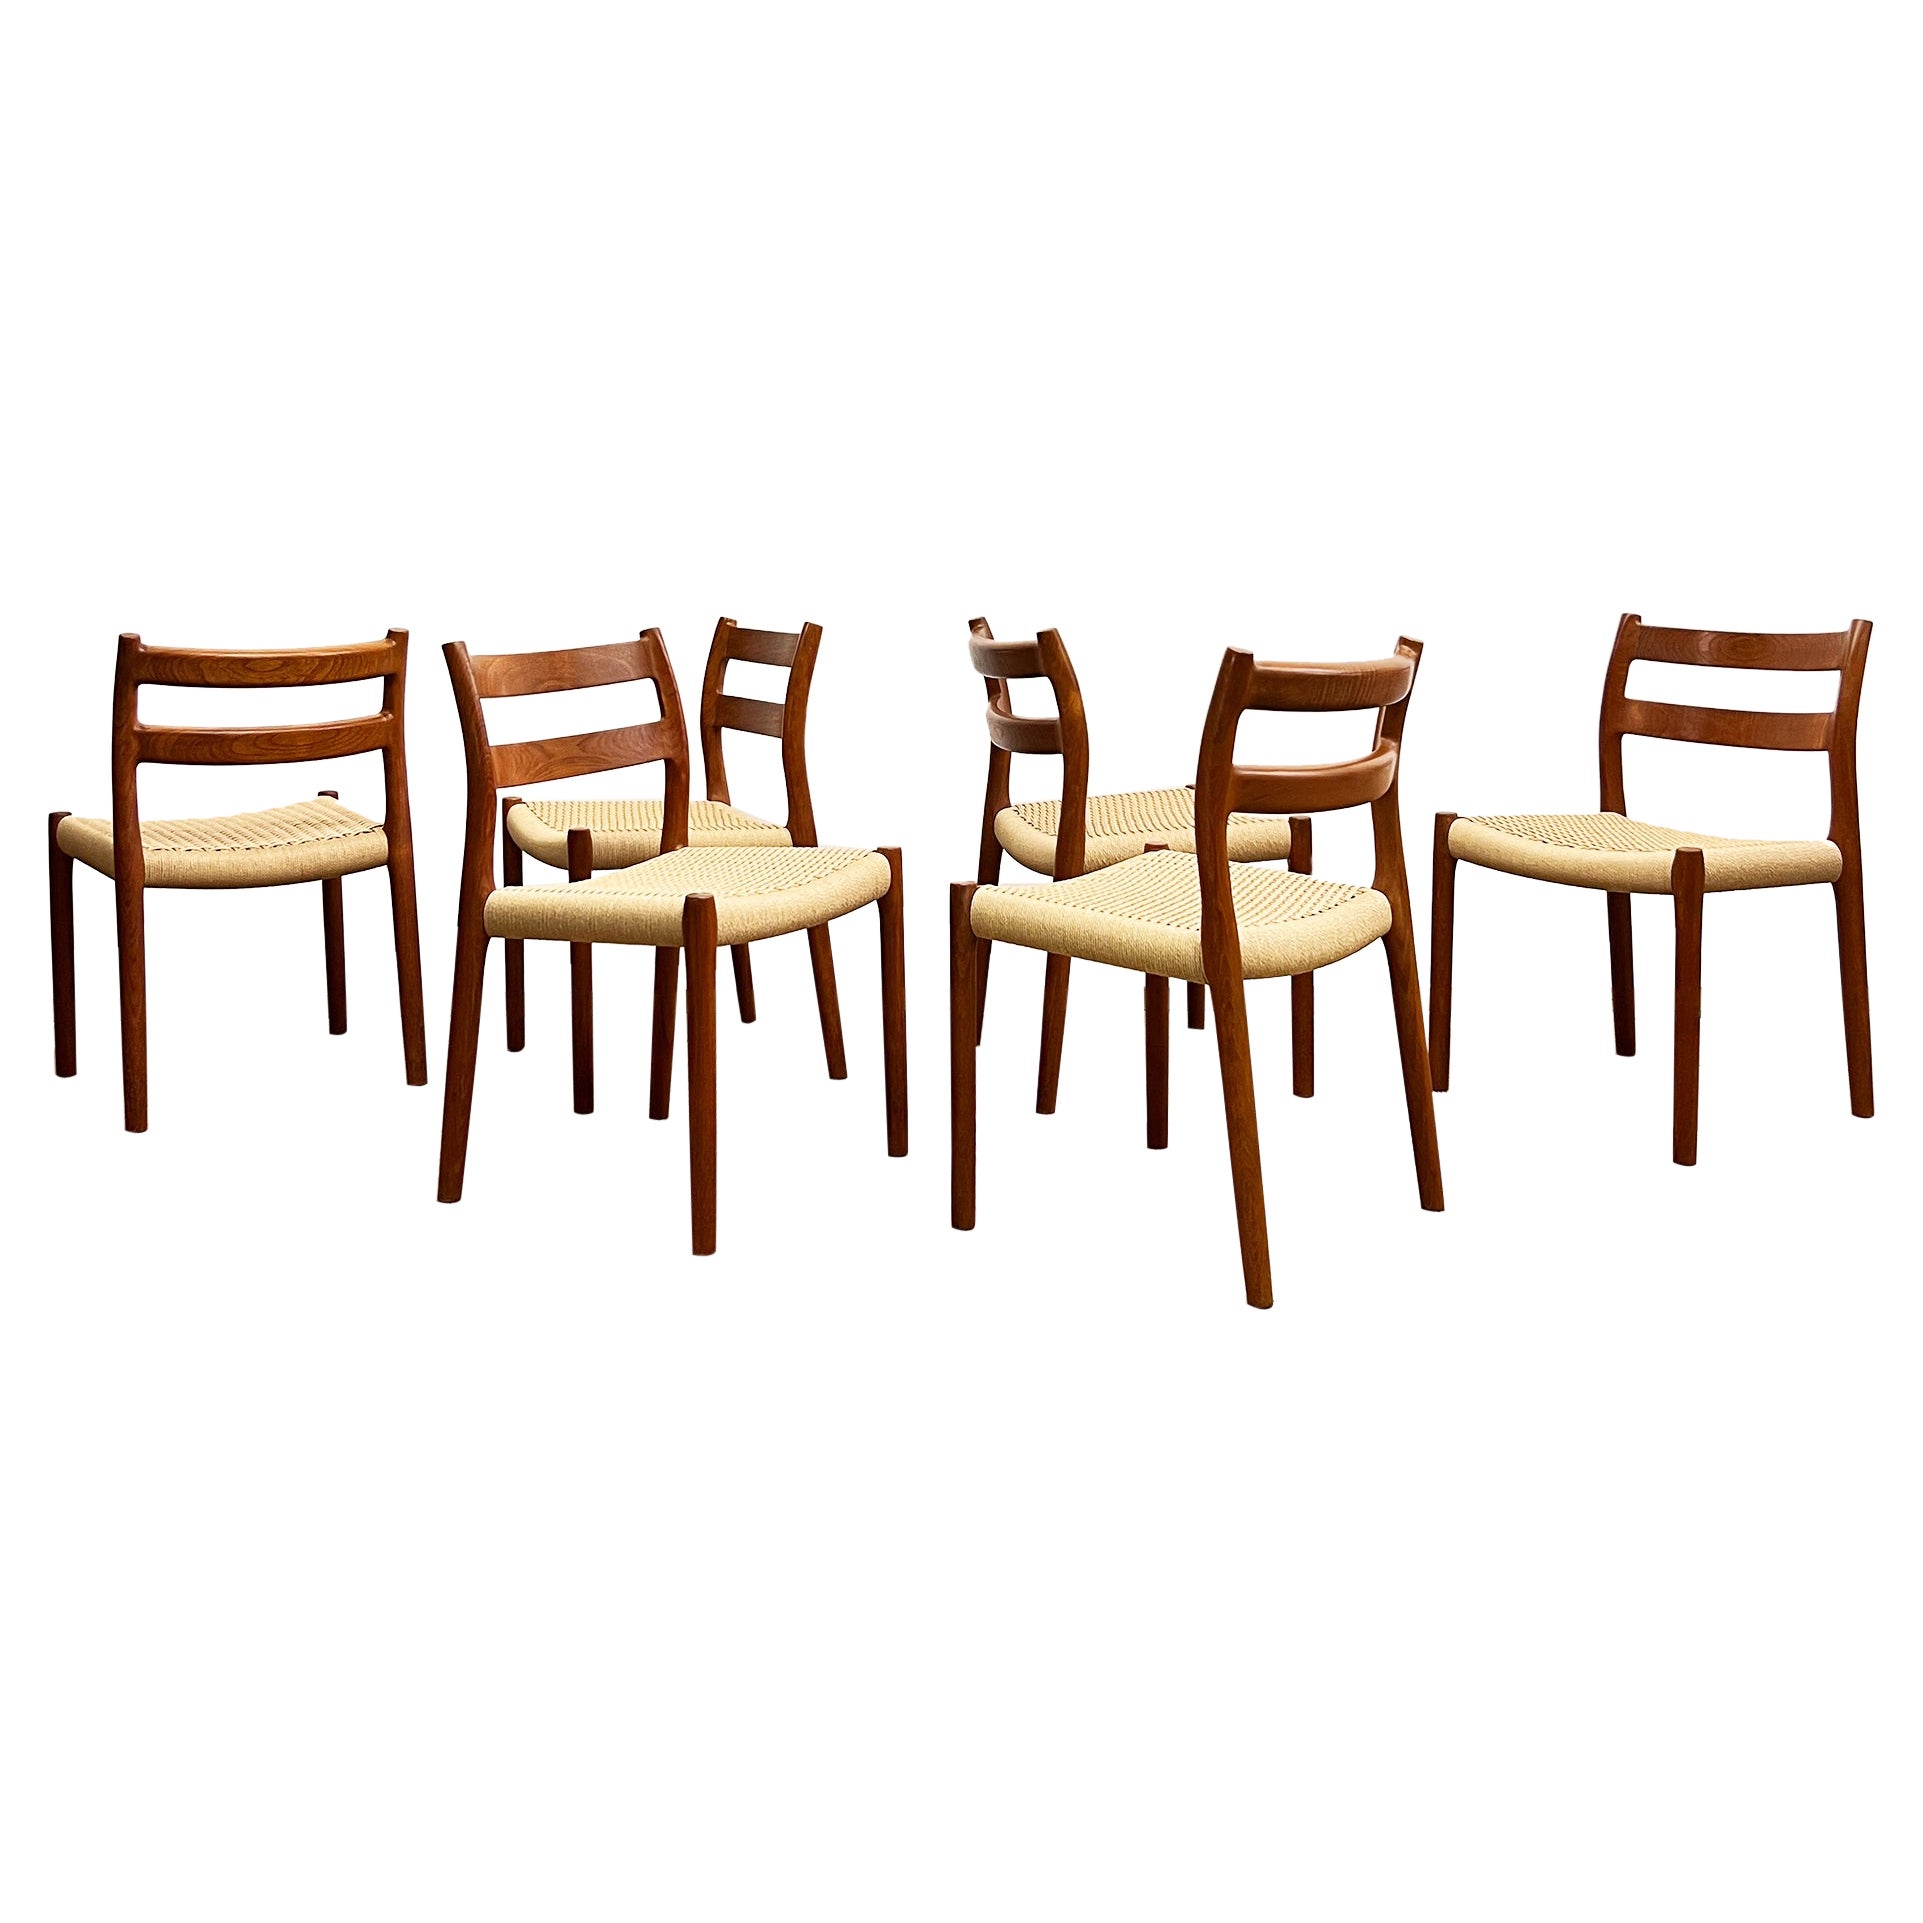 6 Mid-Century Modern Teak Dining Chairs #84 by Niels O. Møller for J. L. Moller